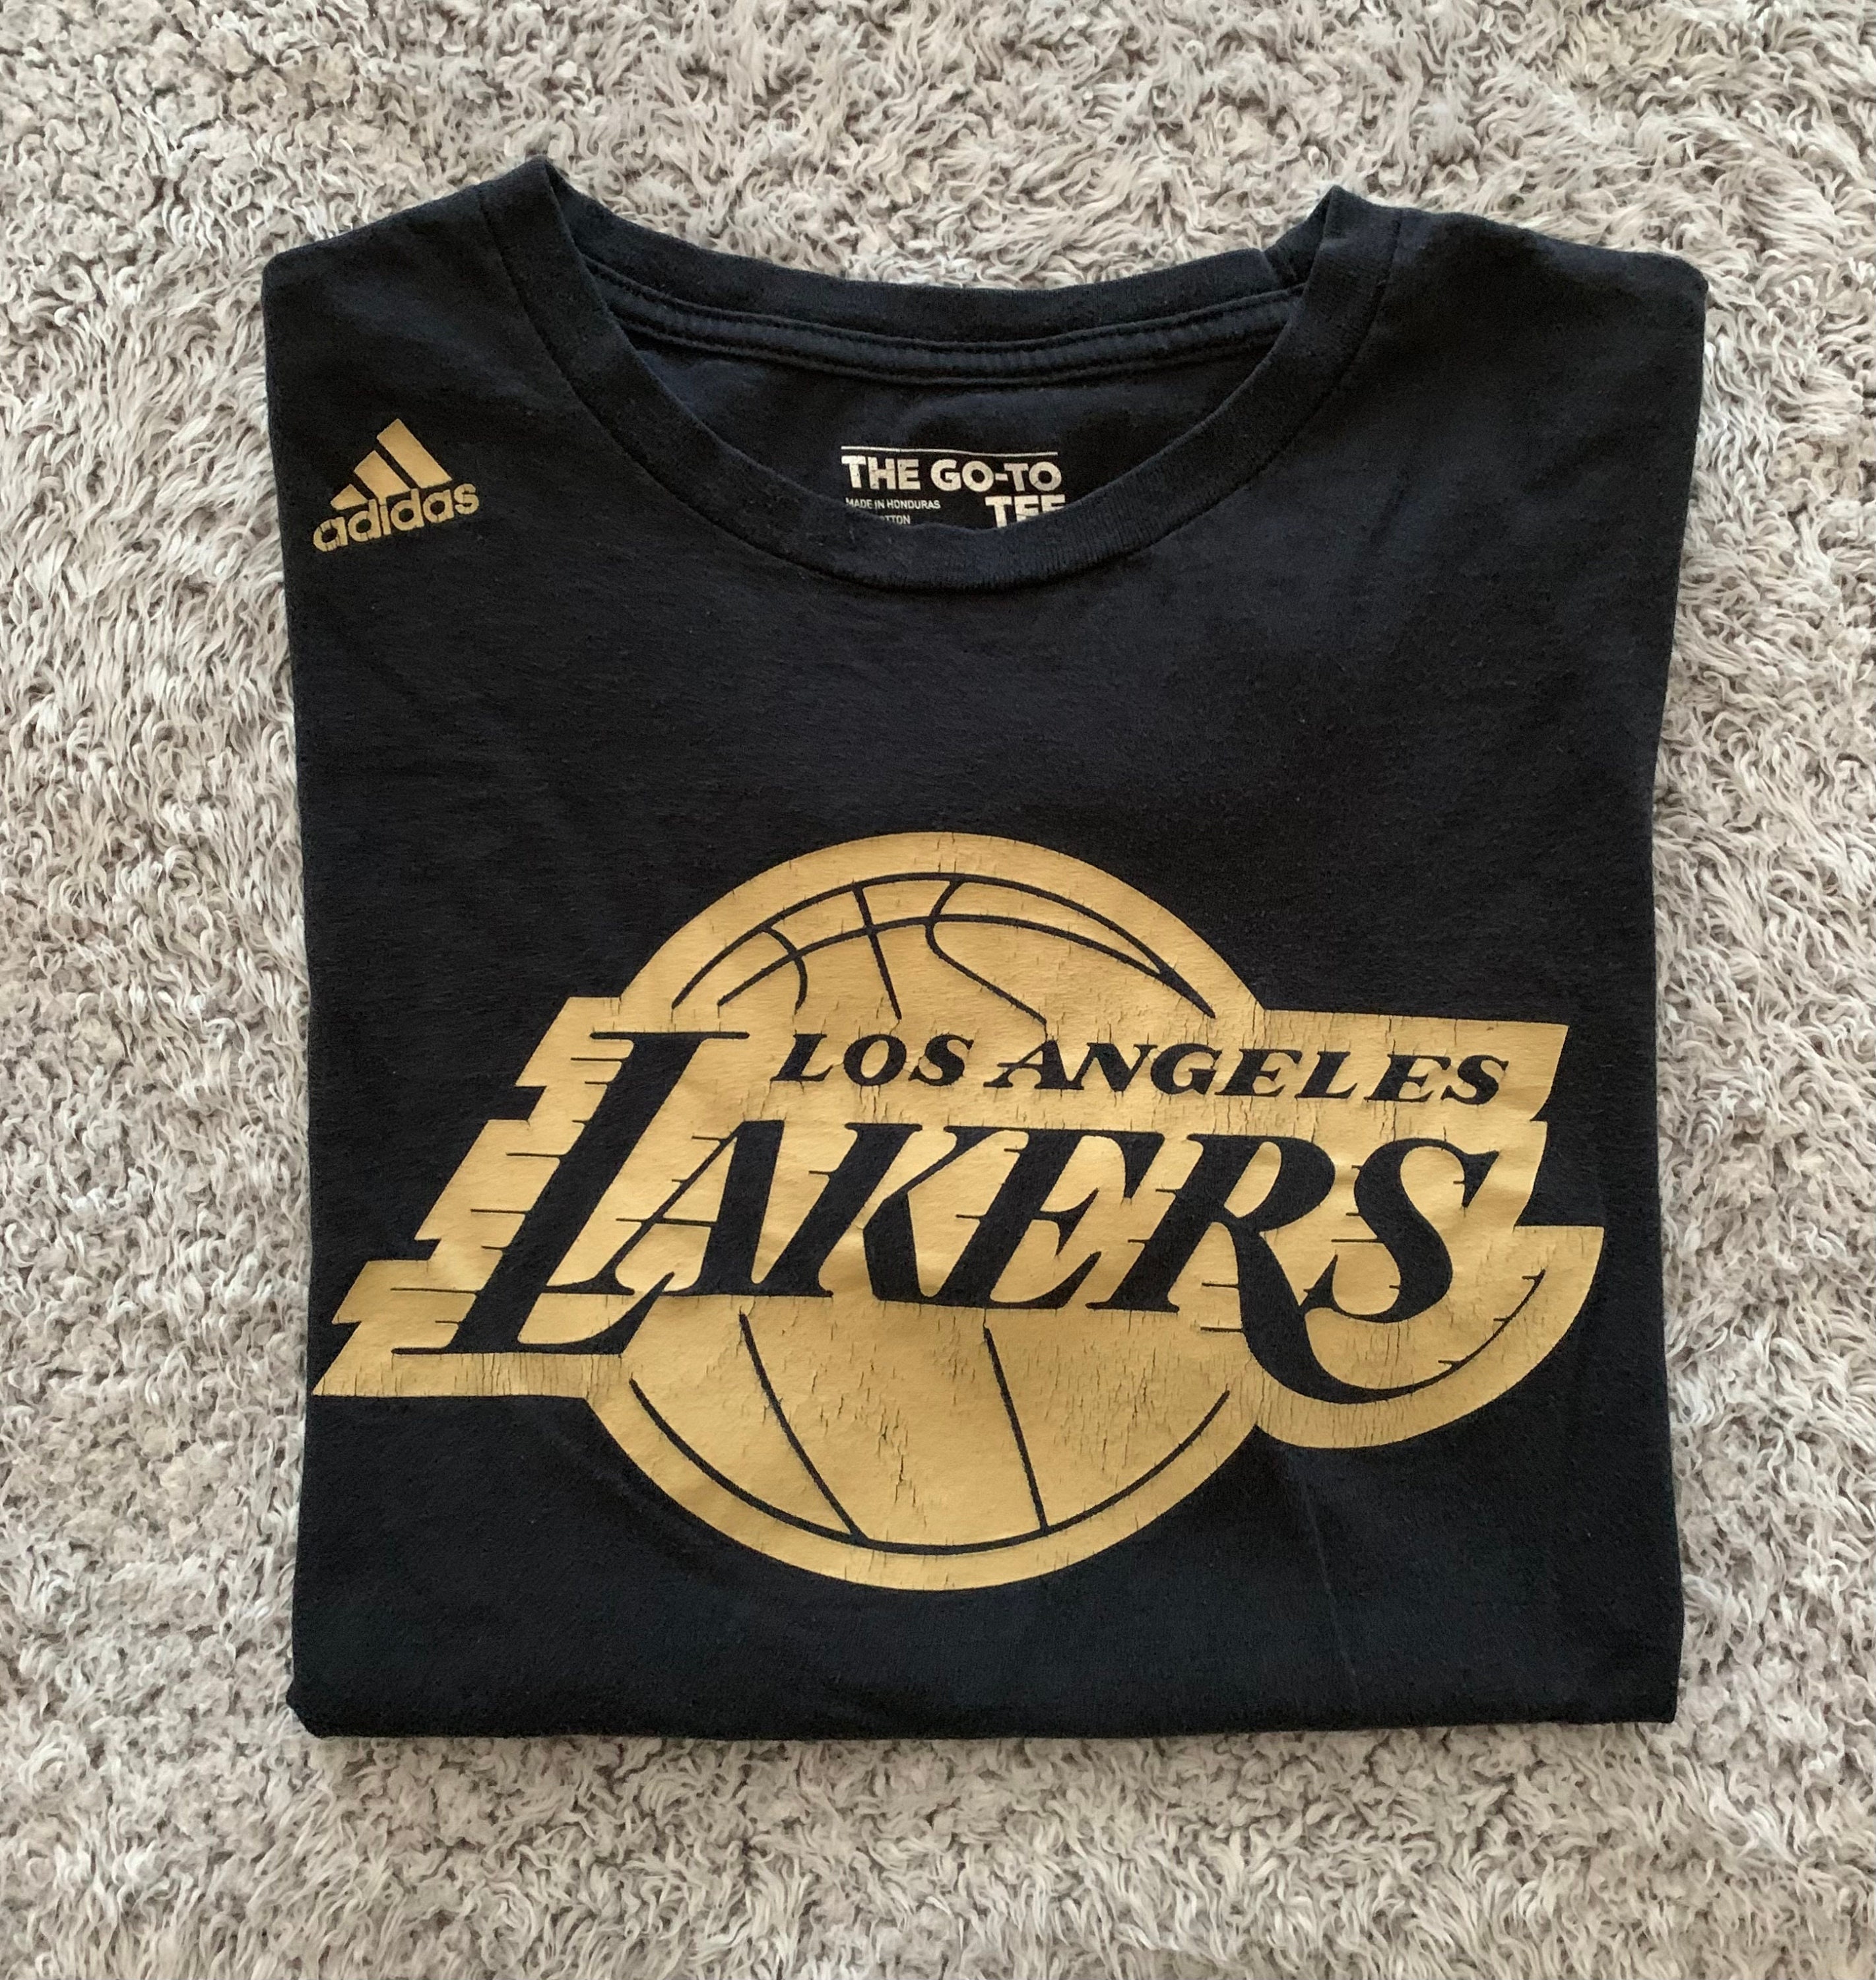 Adidas Original Los Angeles Lakers Kobe Bryant Christmas Day Jersey M  Medium 40